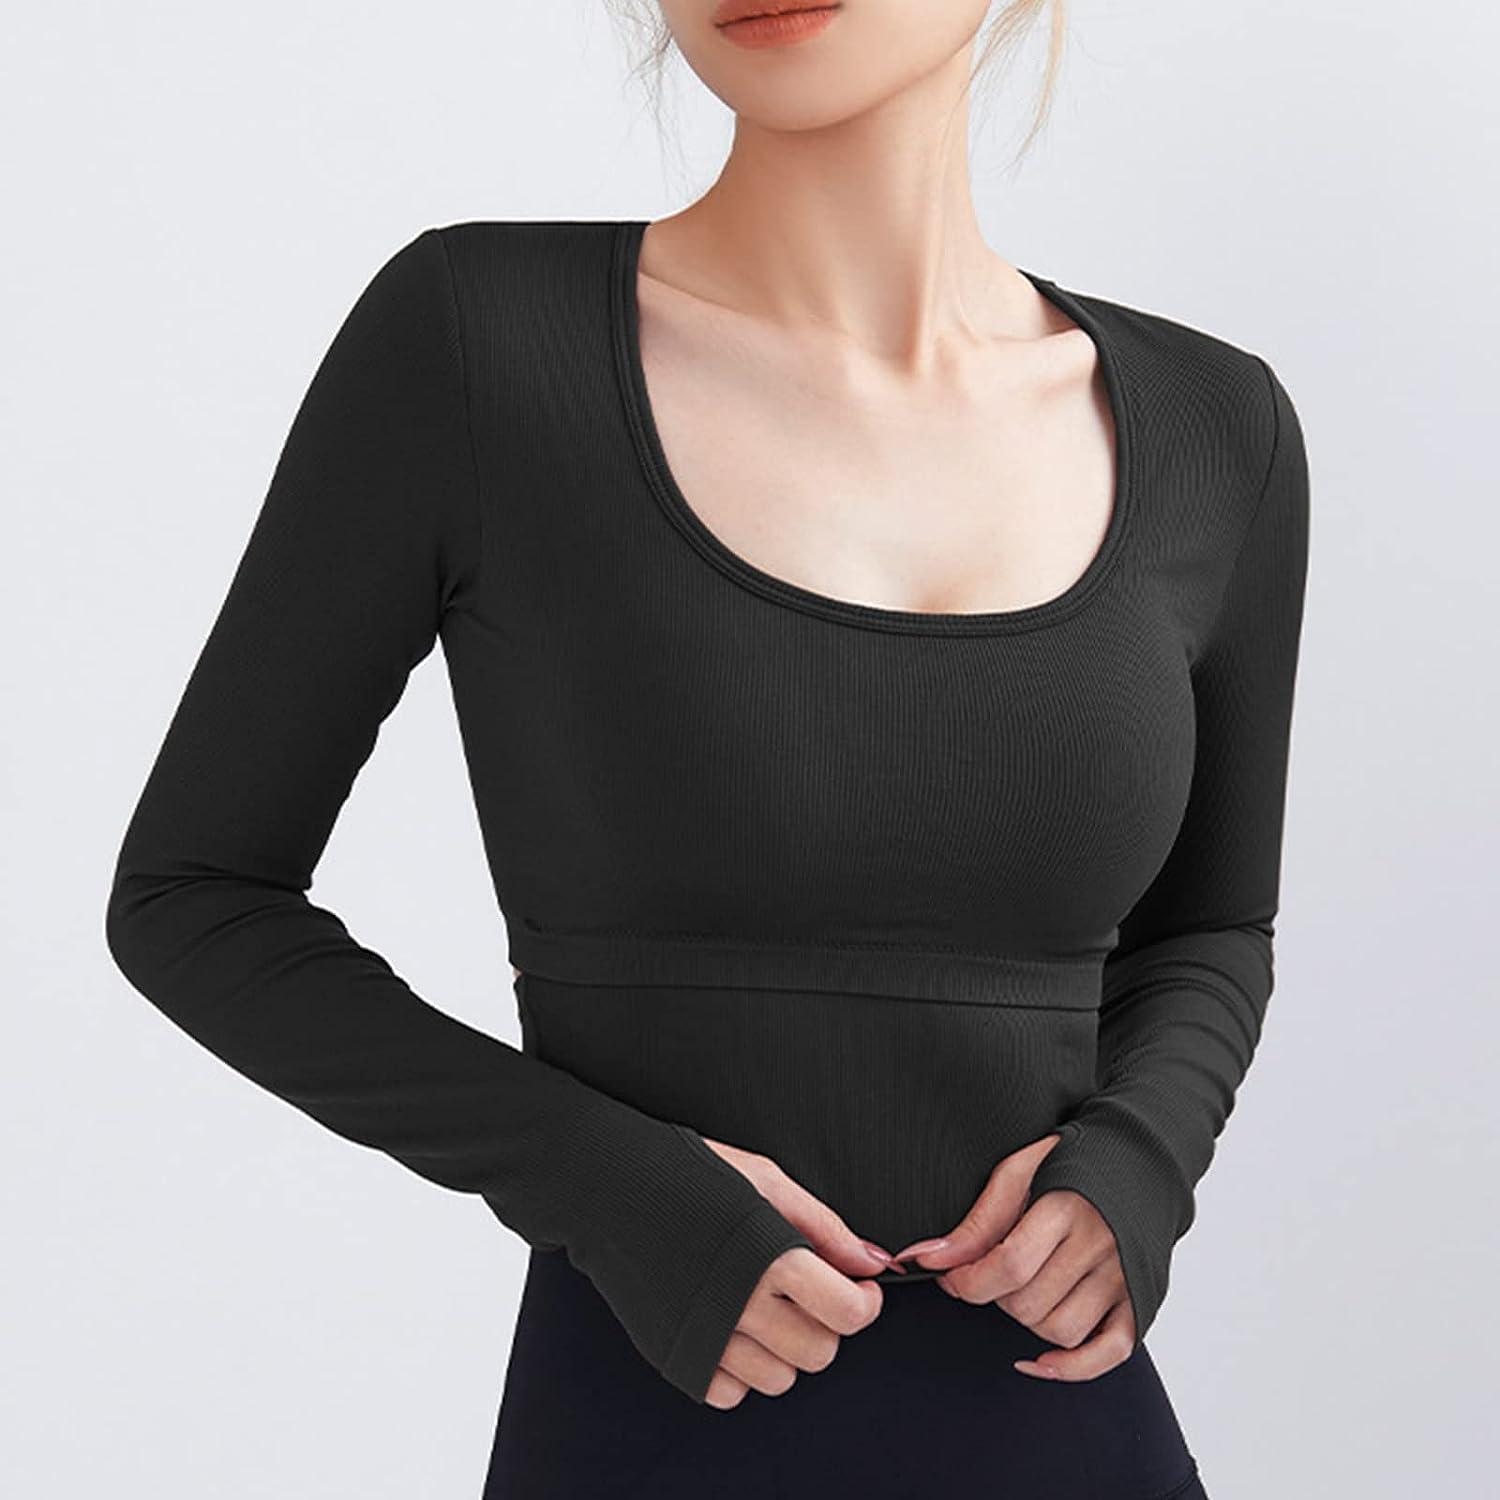 Deep Cut Shirtwomen's Long Sleeve Yoga Top - Slim Fit Compression Shirt  For Fitness